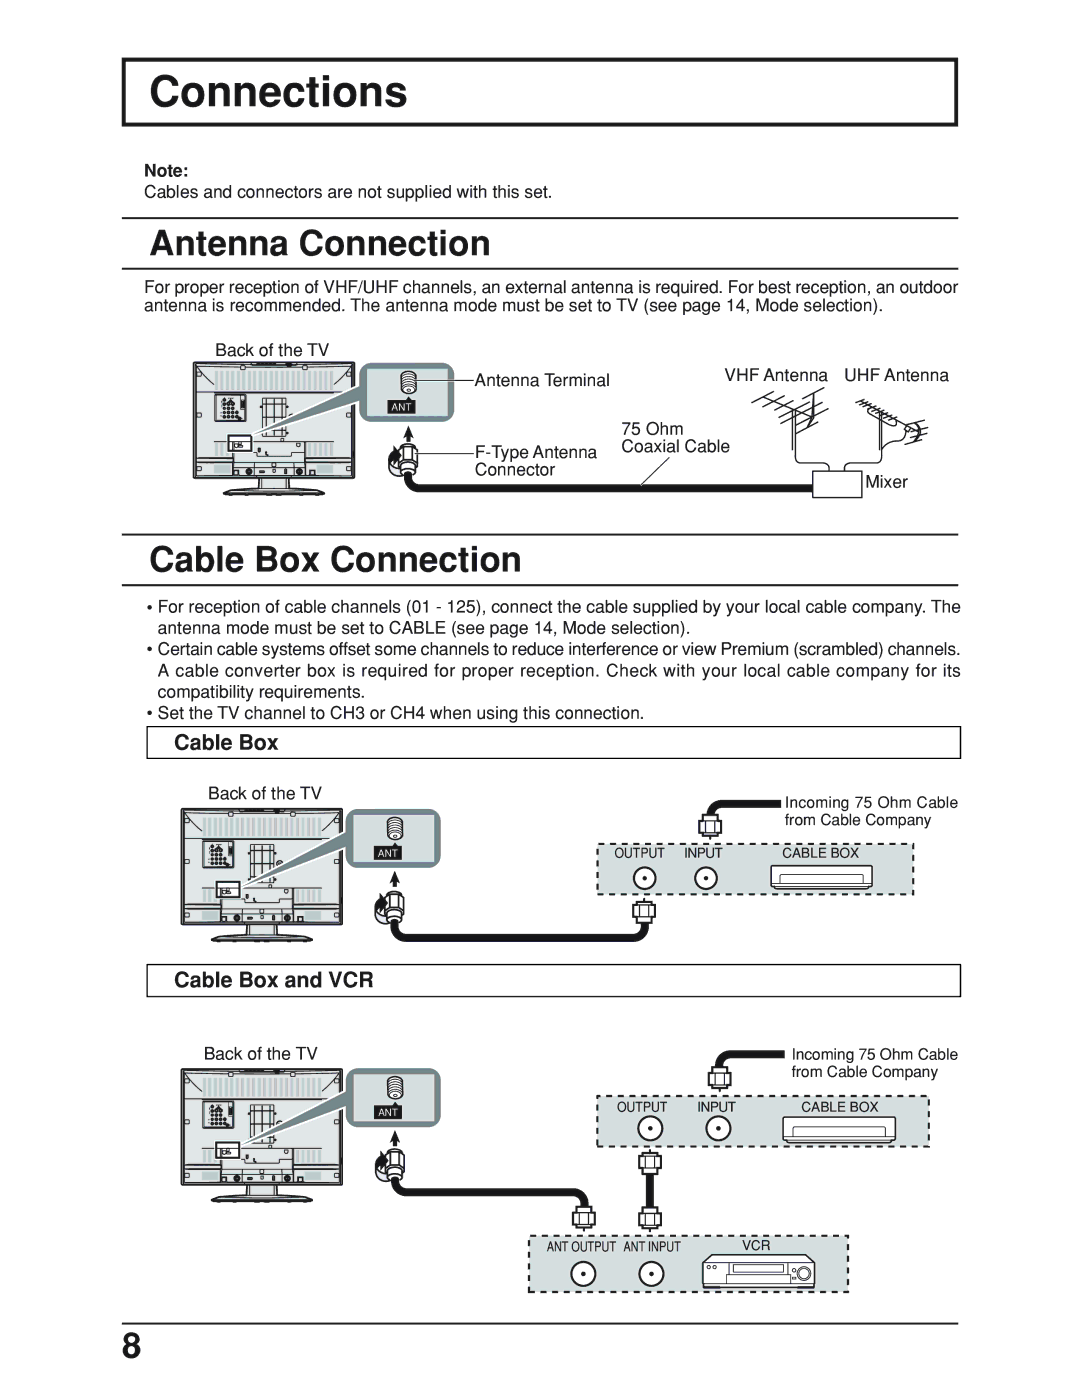 Panasonic TC-19LE50, TC 19LX50 manual Connections, Antenna Connection, Cable Box Connection, Cable Box and VCR 